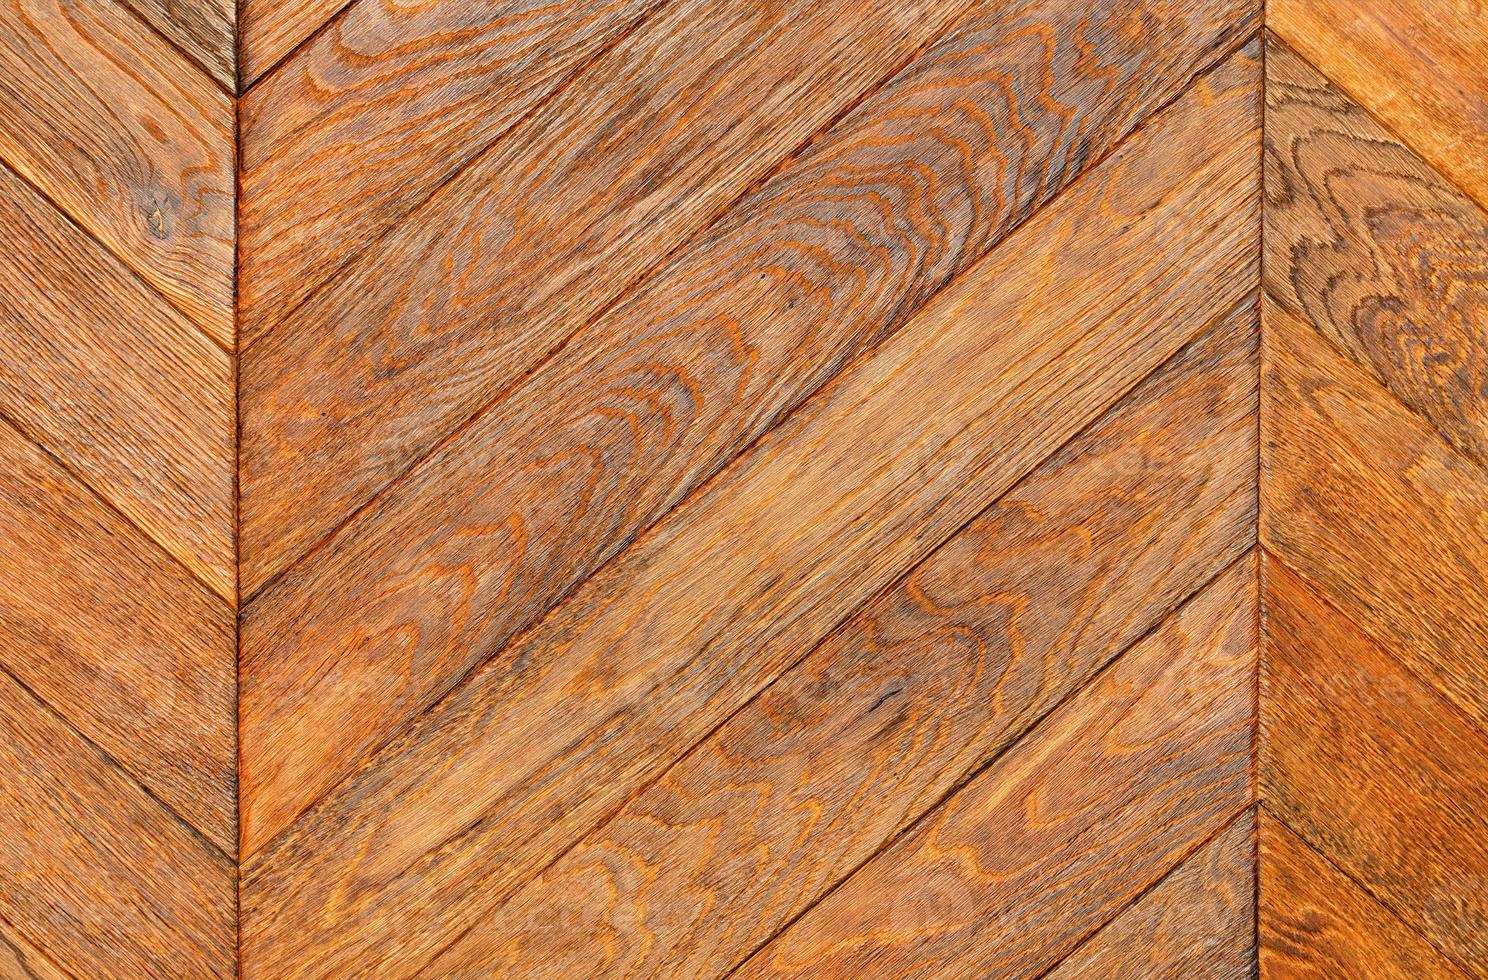 A beautiful texture of oak slats arranged diagonally in a herringbone pattern. photo